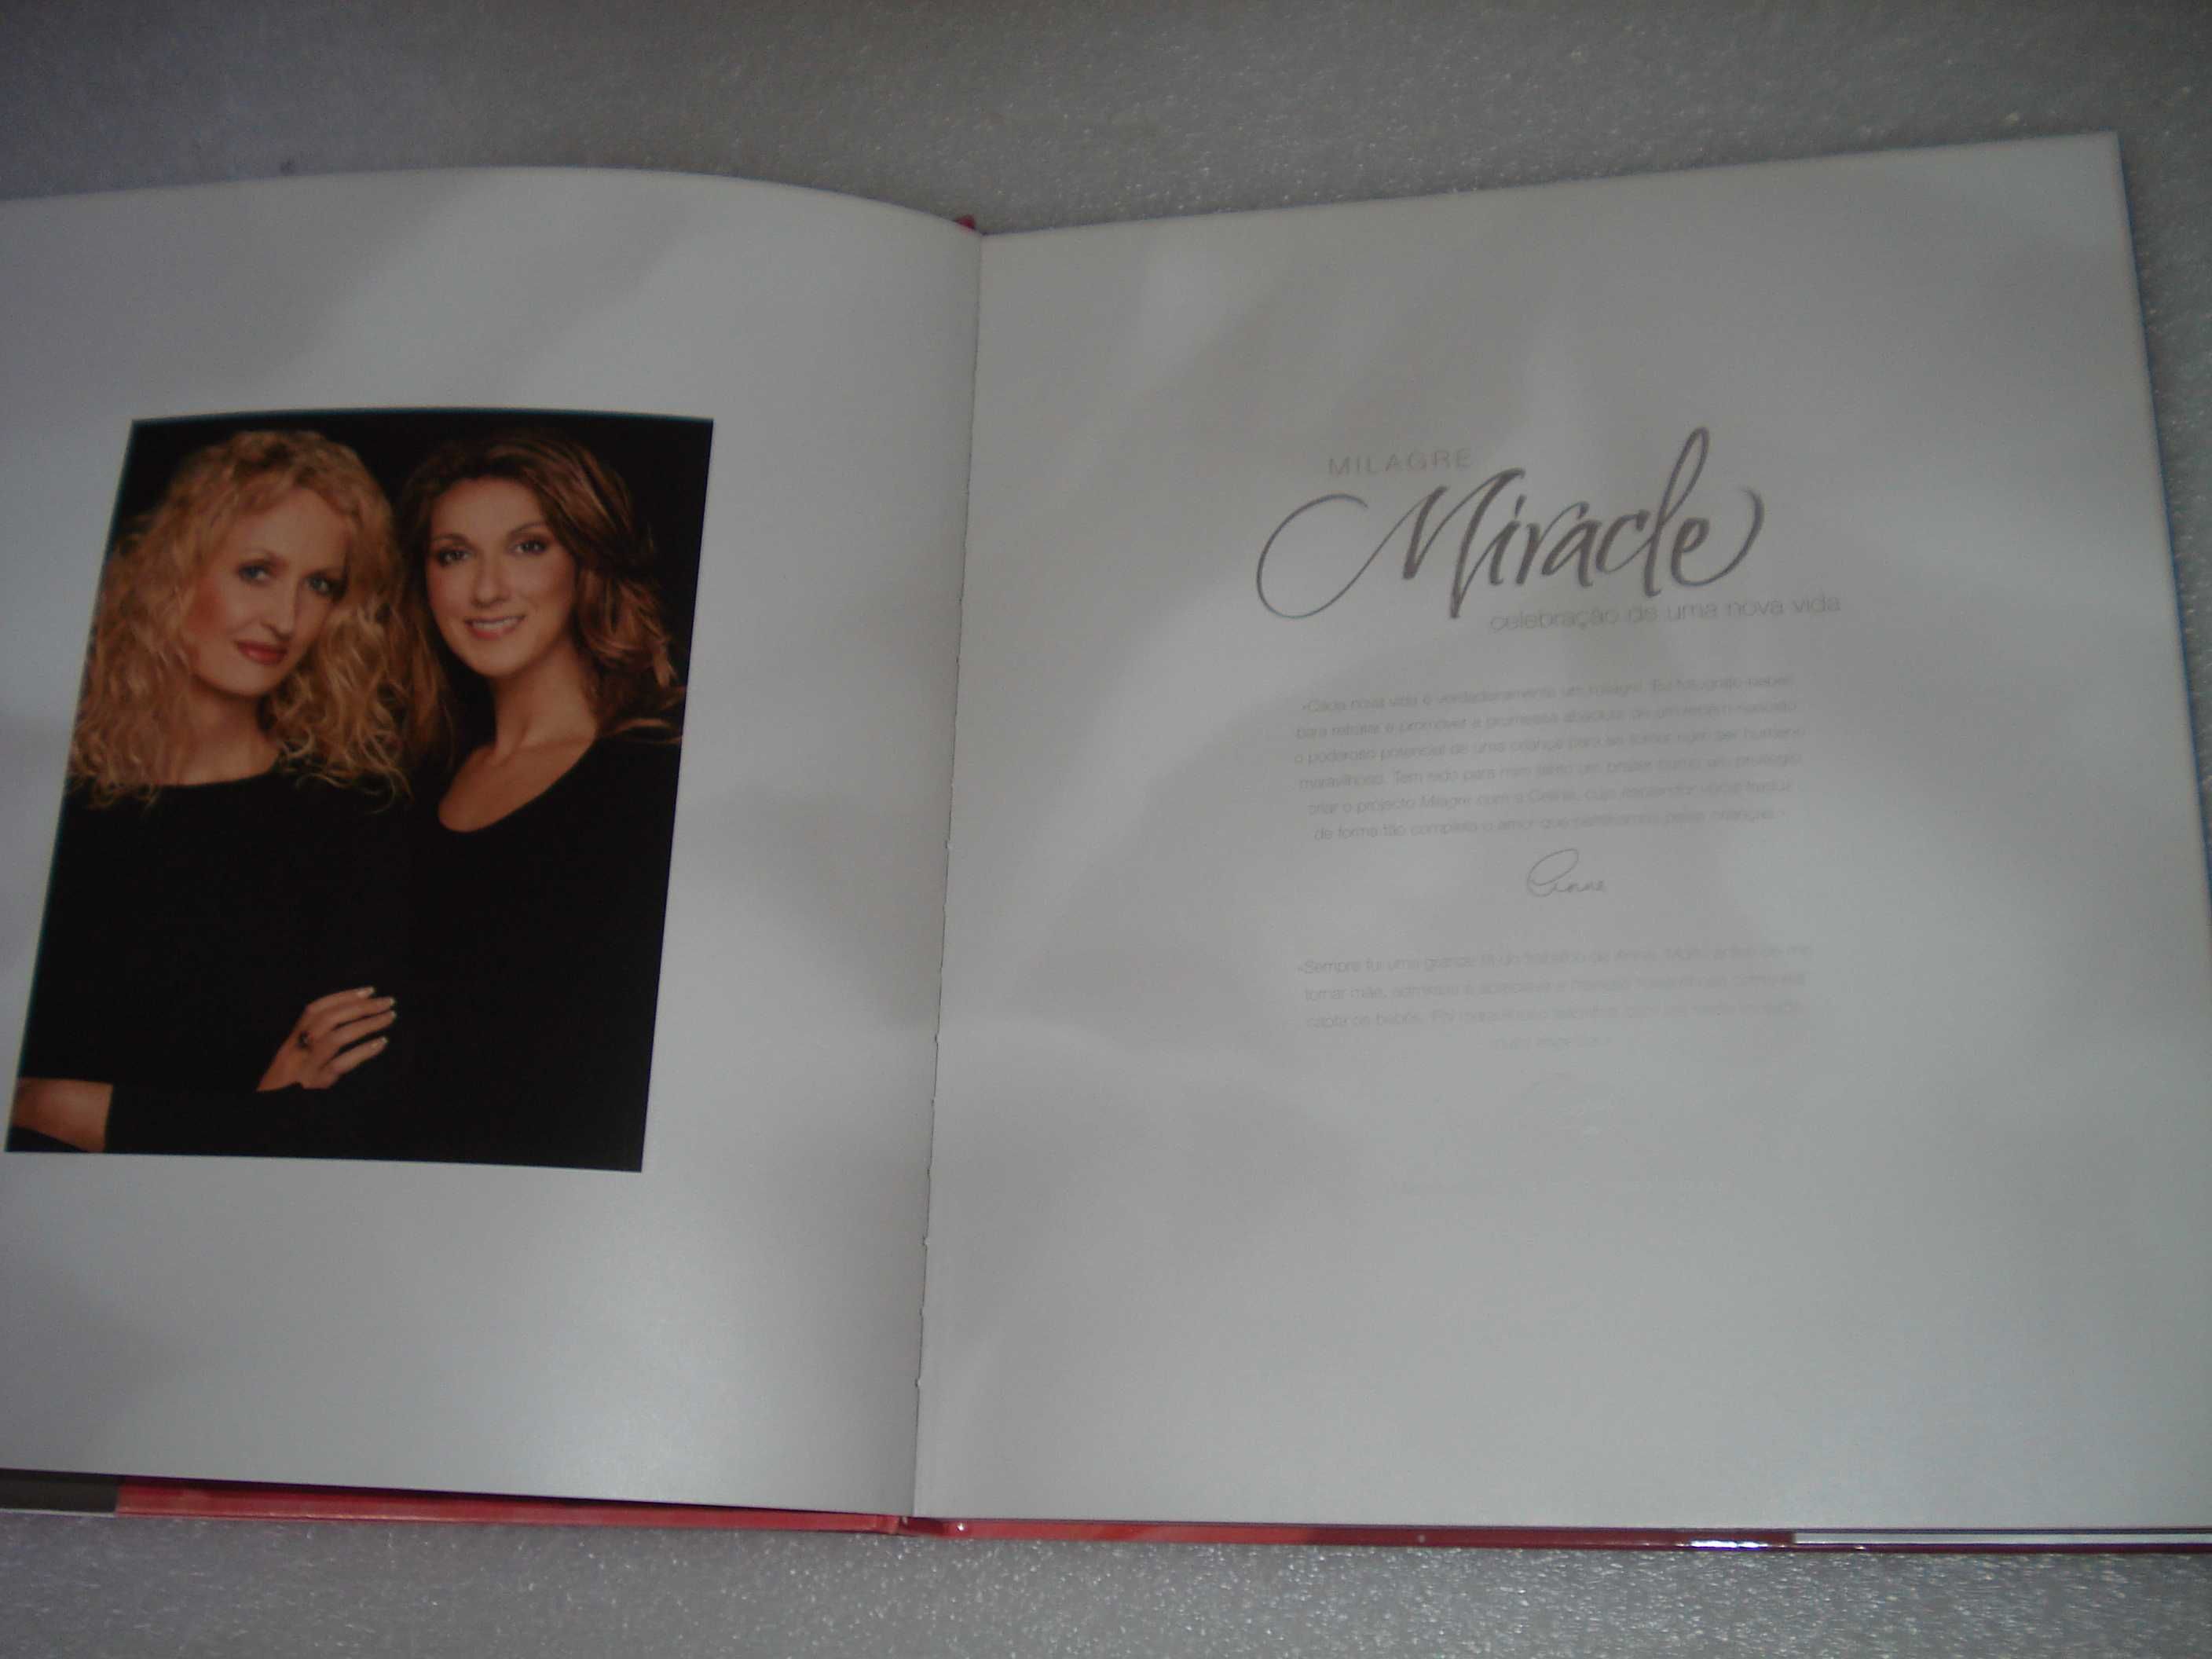 Raro livro de grandes dimensões de Celine Dion - Milagre -2004